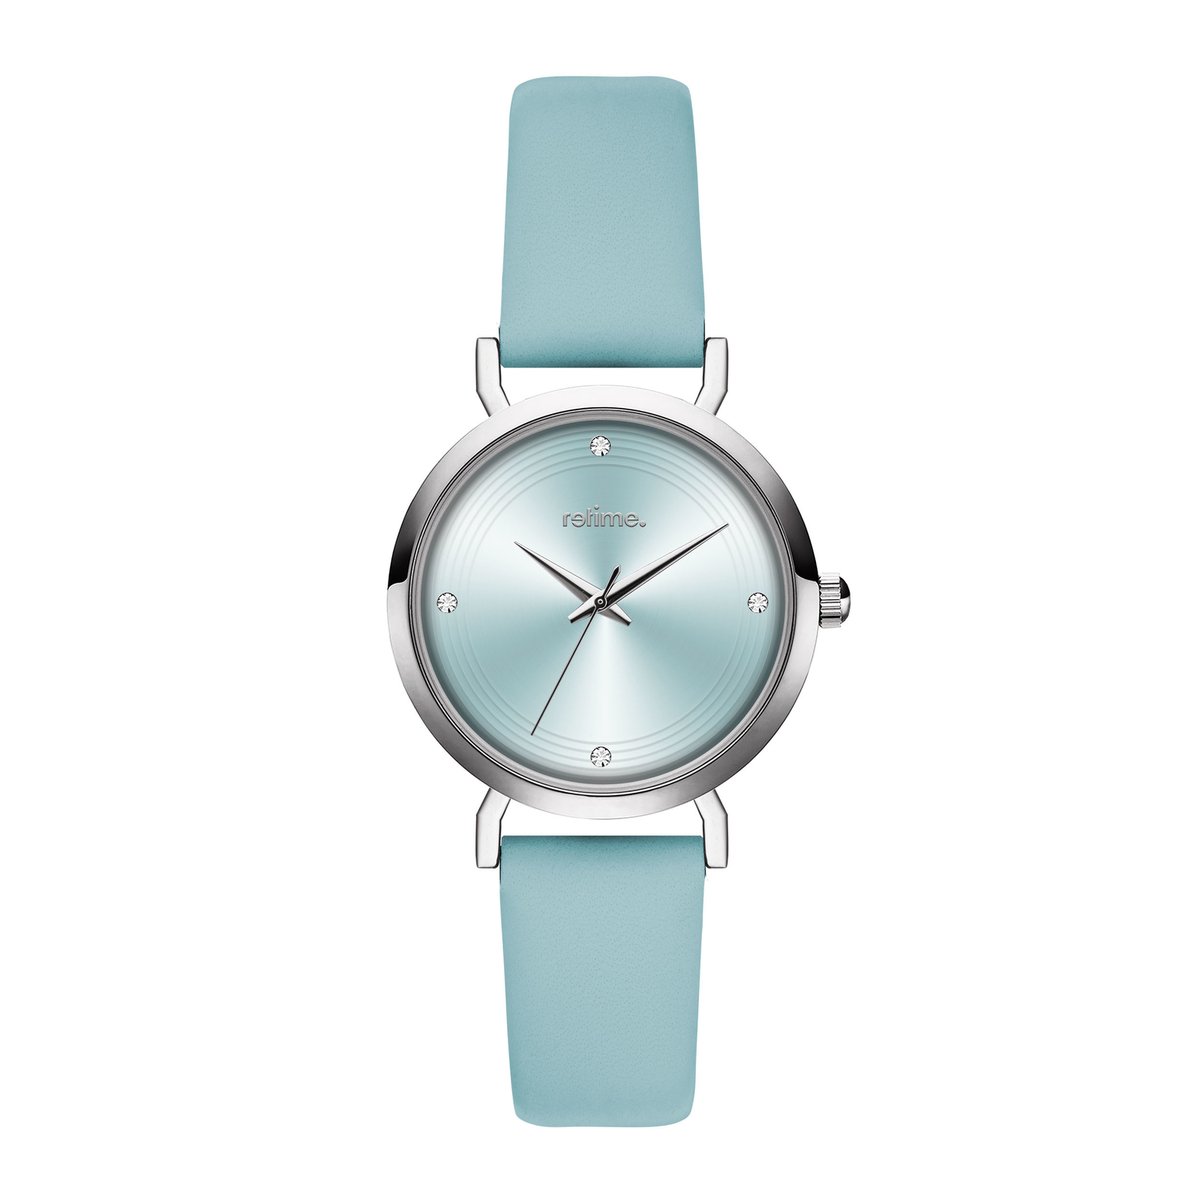 Armbanduhr RETIME-DESIGN 440-004 silber/blau 34mm